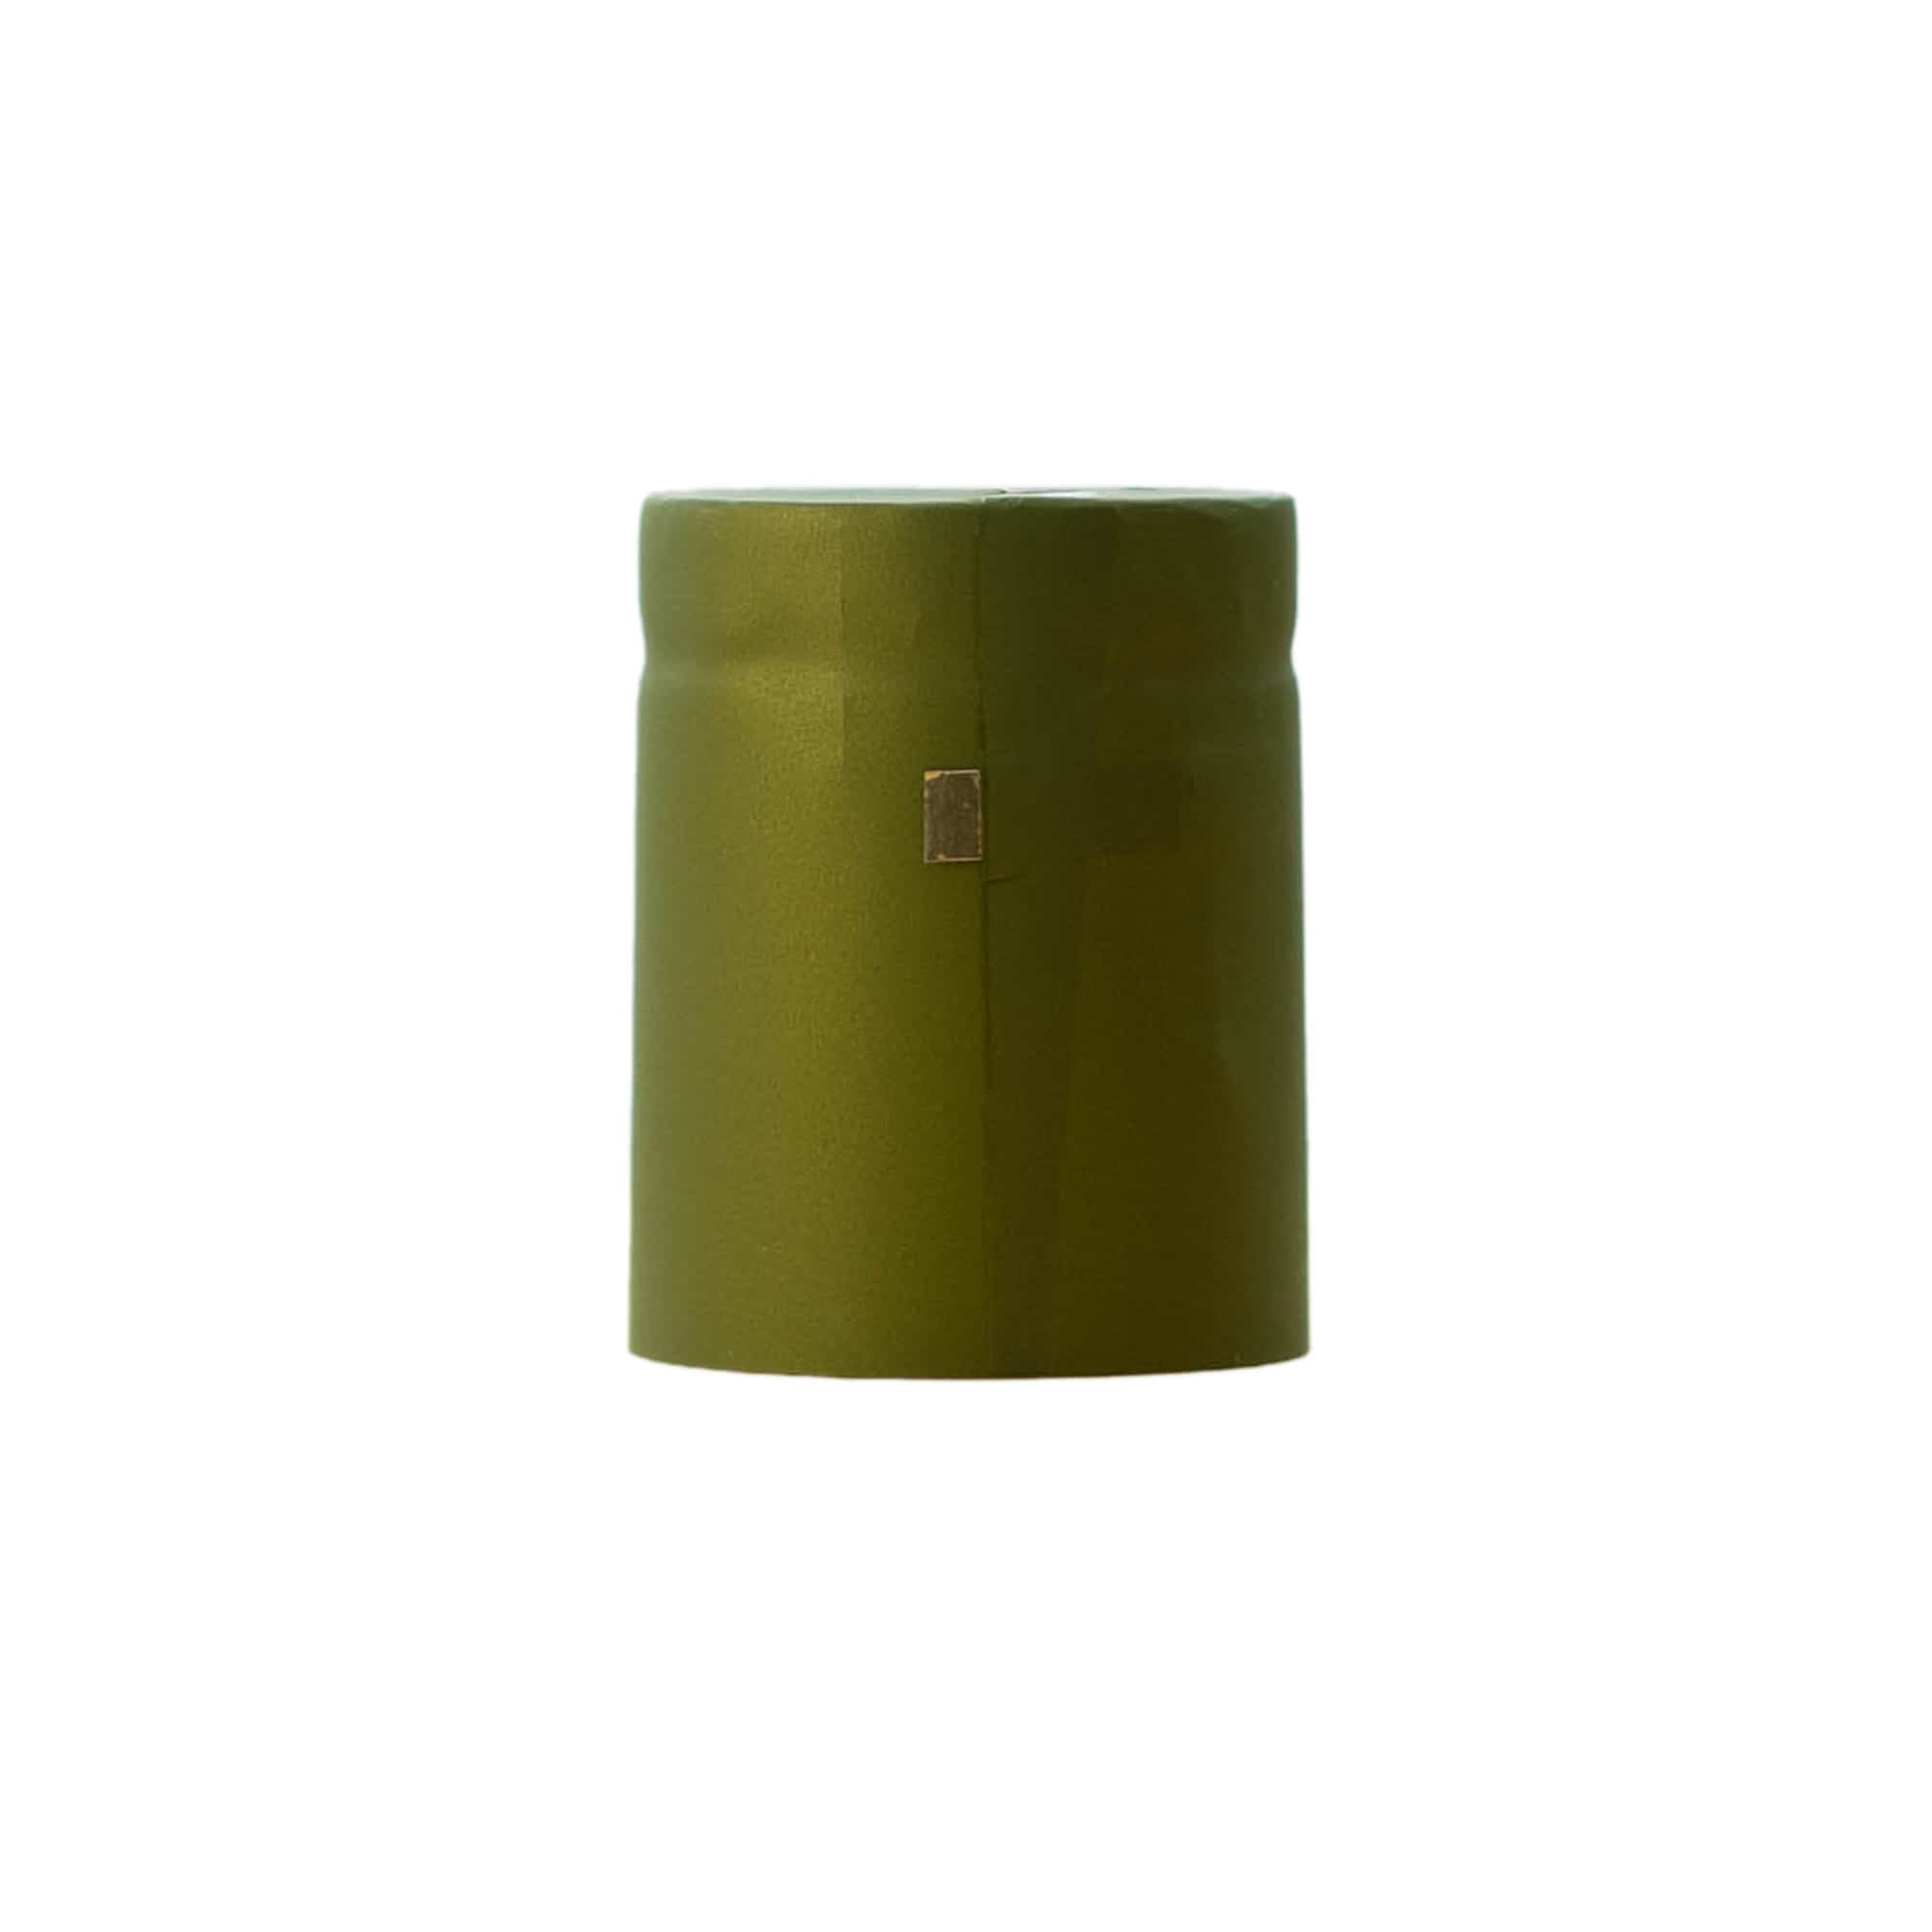 Cápsula termoencogible 32x41, plástico de PVC, verde oliva